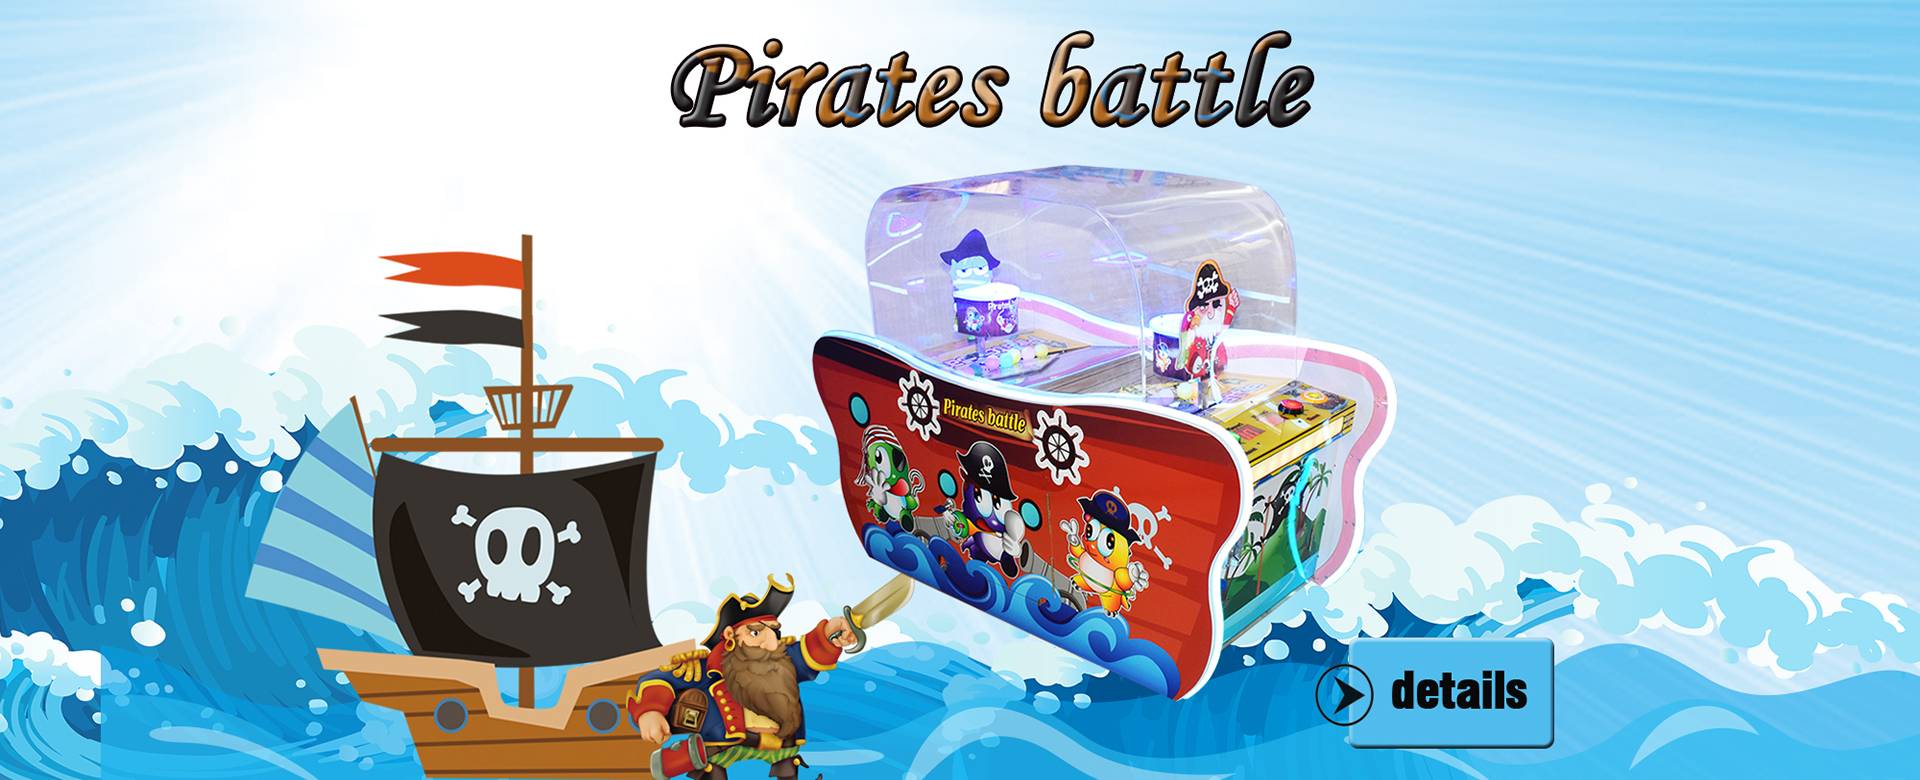 coin-operated-pirates-battle-pinball-game-machine